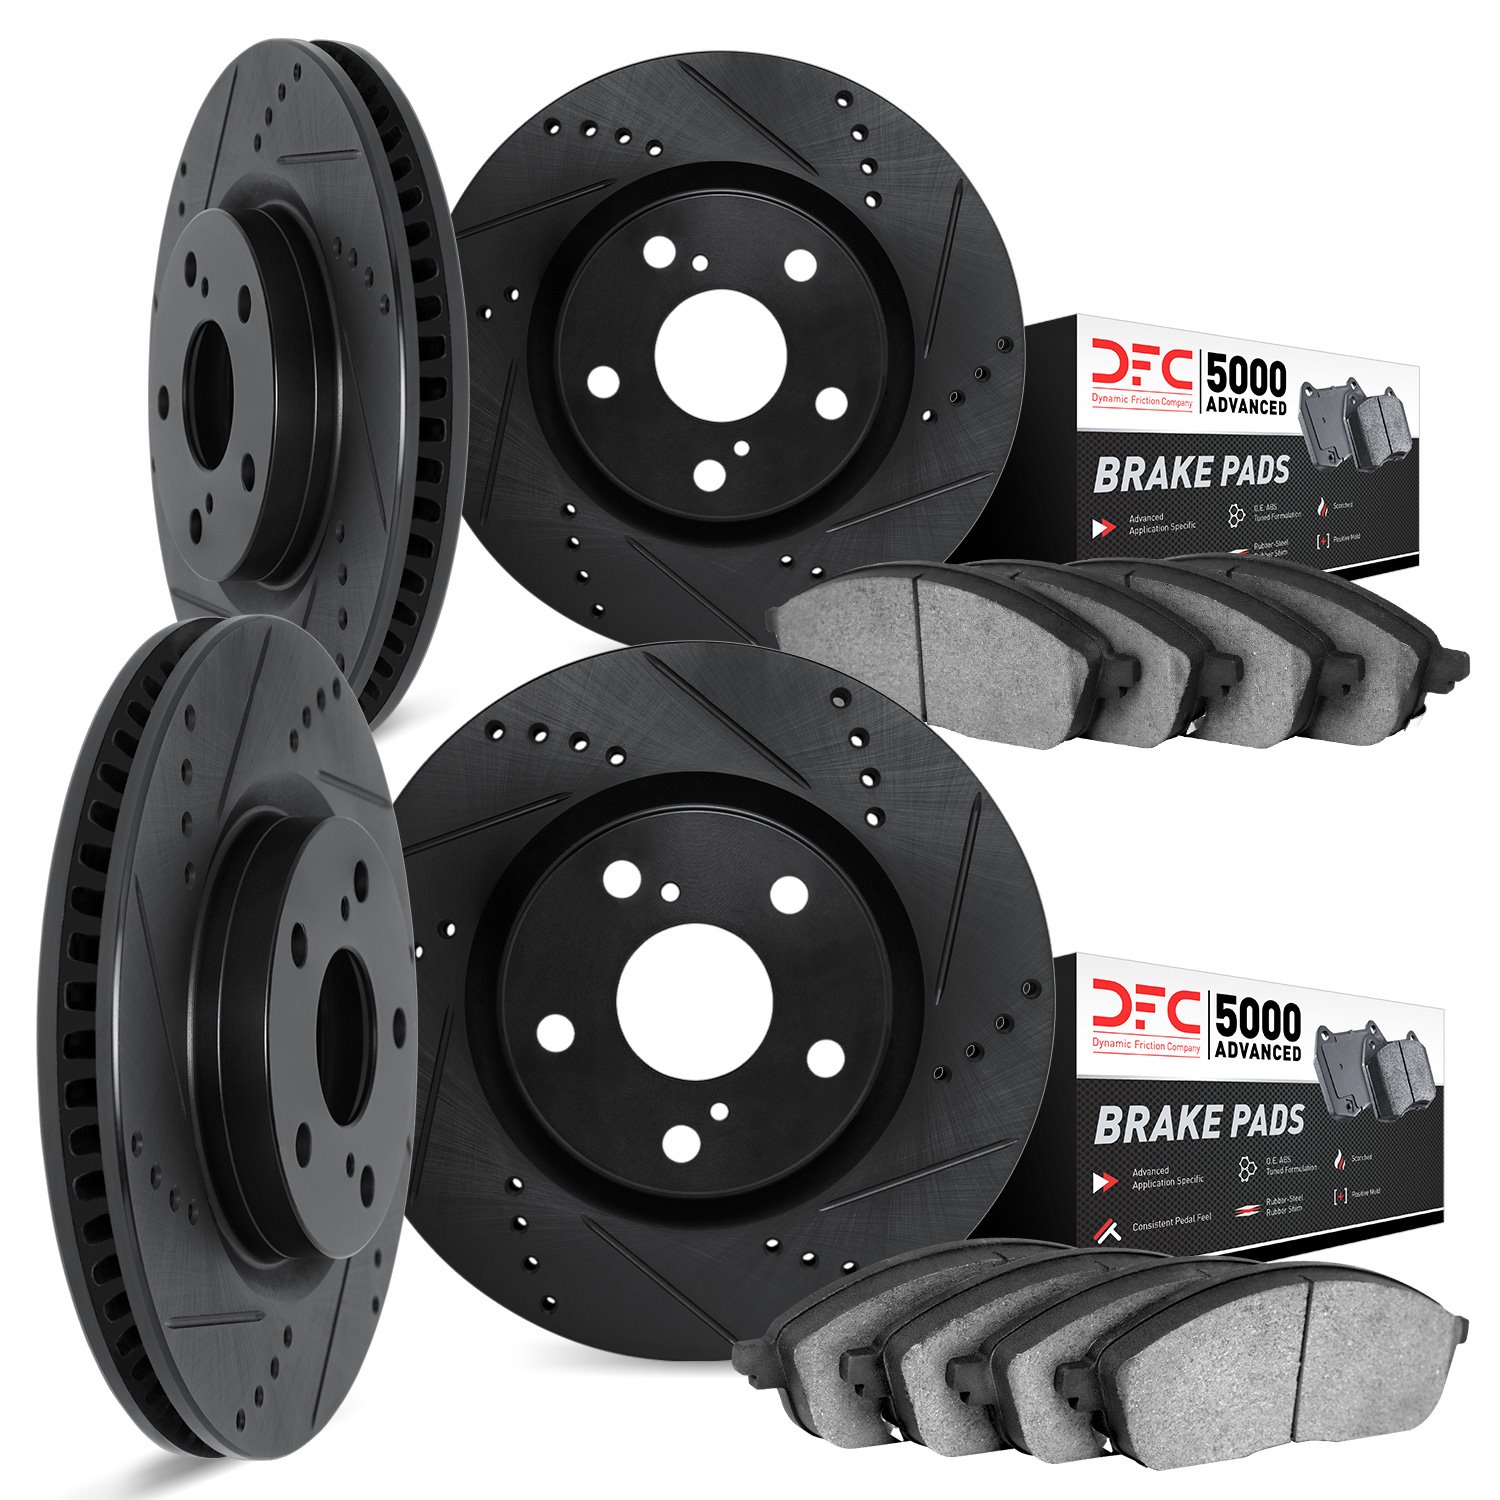 8504-40230 Drilled/Slotted Brake Rotors w/5000 Advanced Brake Pads Kit [Black], 2002-2006 Multiple Makes/Models, Position: Front